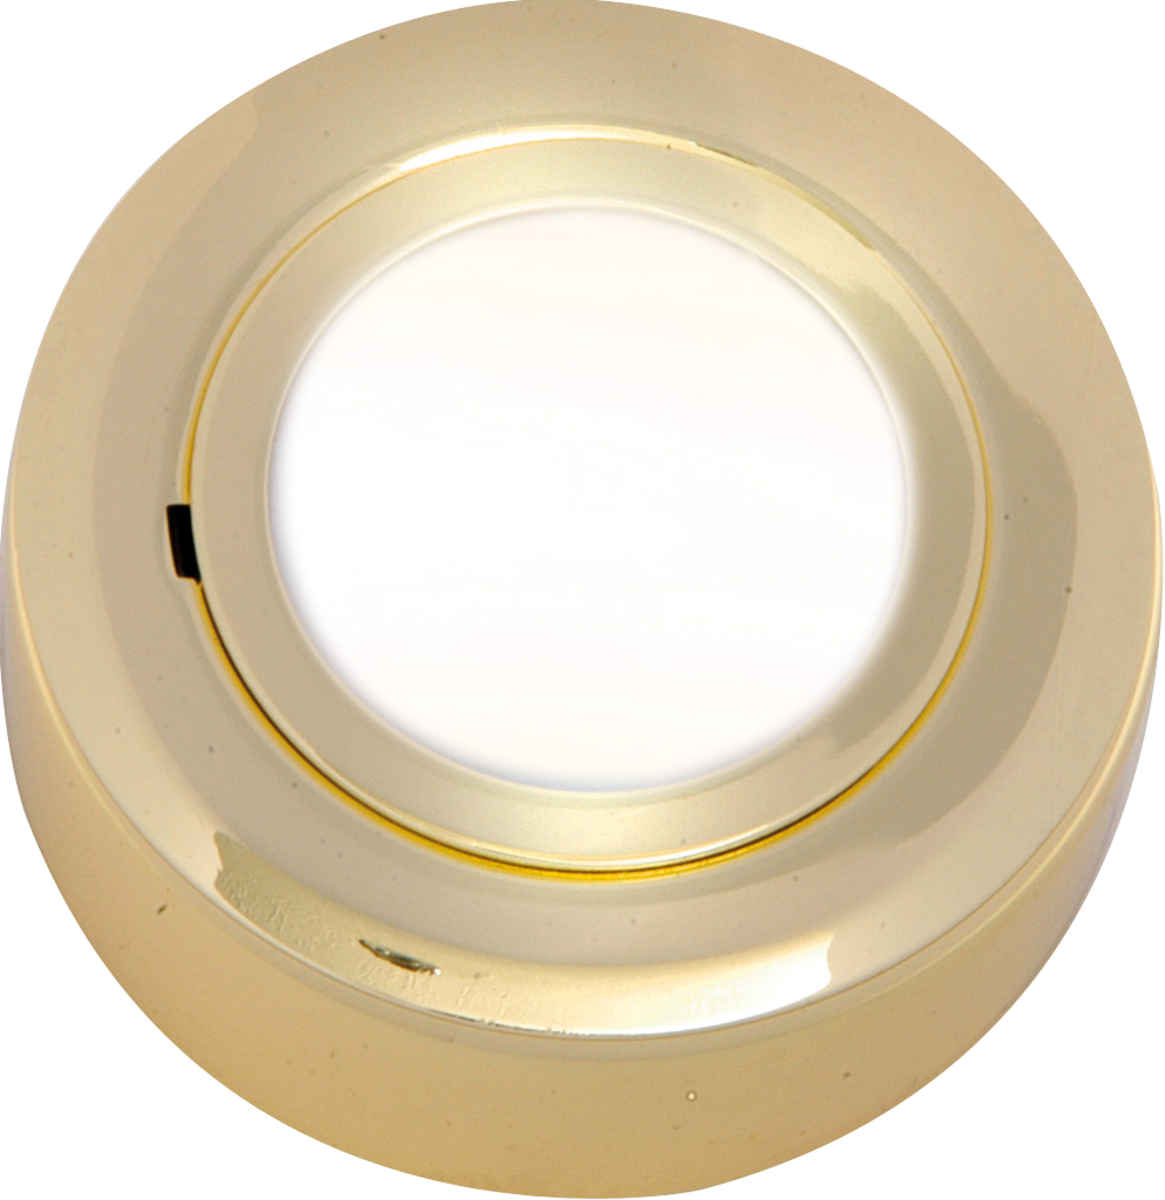 Knightsbridge IP20 12V L/V Brass Cabinet Fitting Surface or Recessed (halogen lamp included)